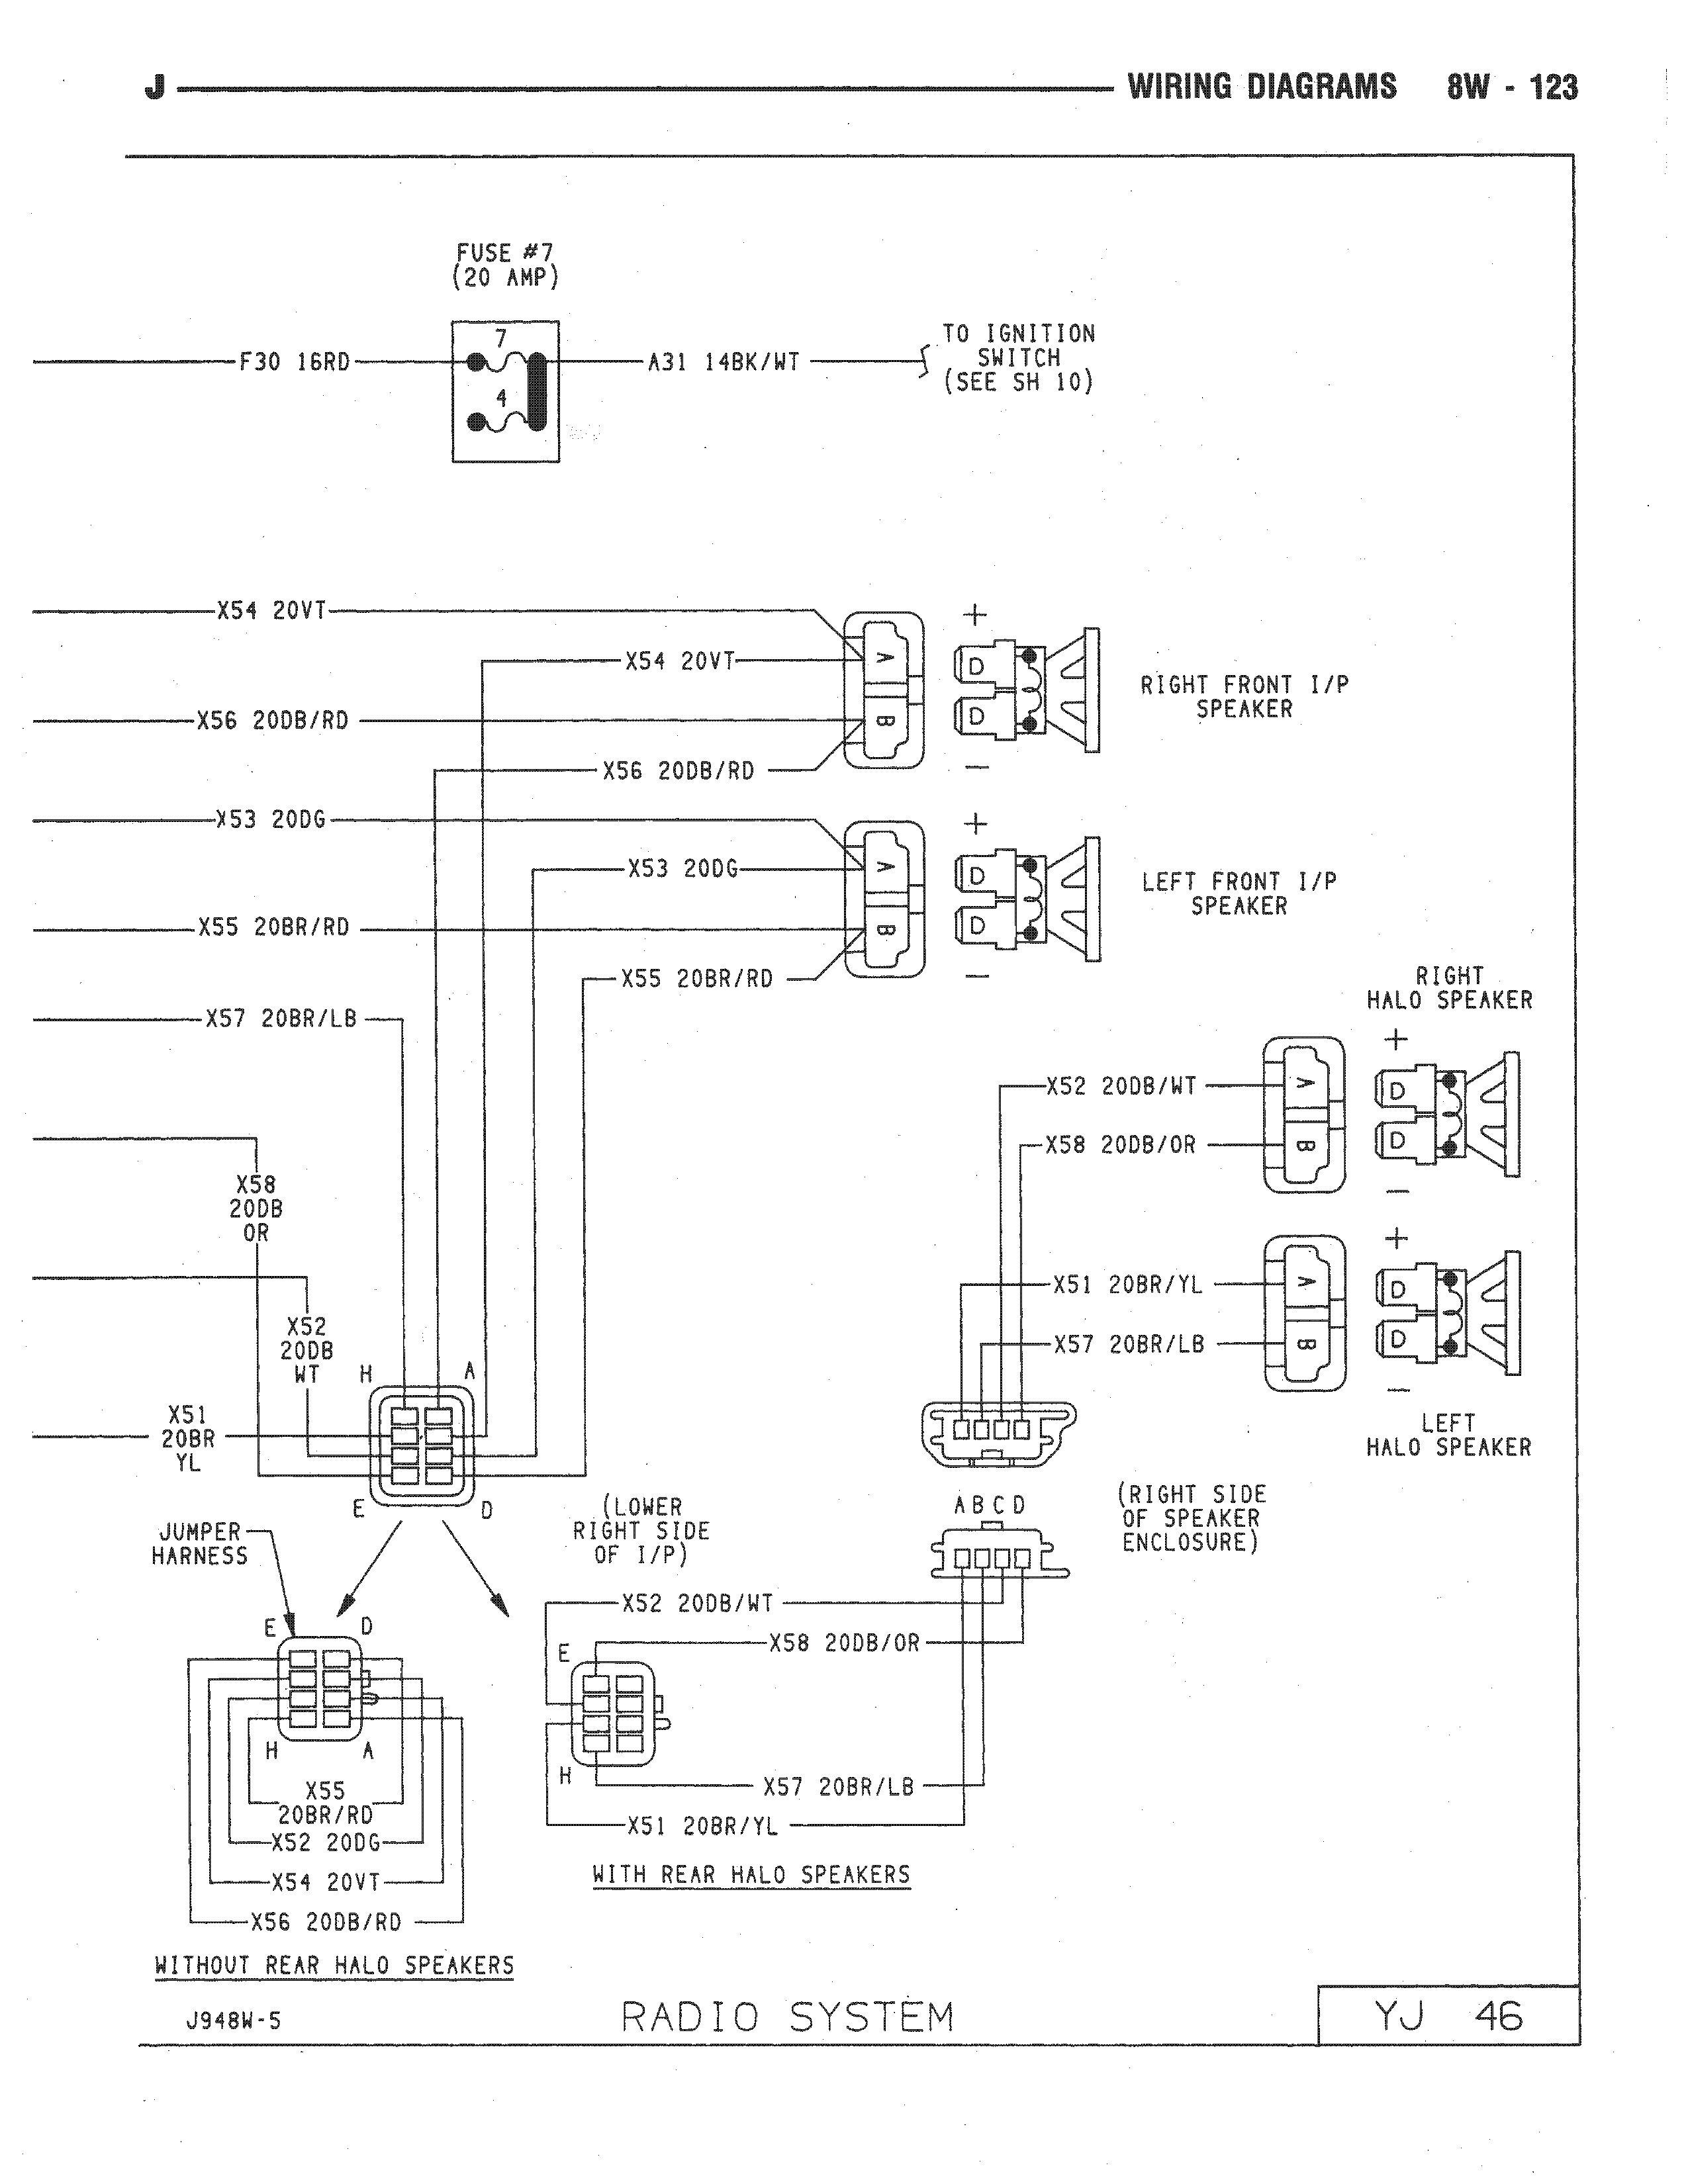 Jeep Wrangler Radio Wiring Diagram Jeep Wrangler Stereo Wiring Diagram Wiring Schematics Diagram Of Jeep Wrangler Radio Wiring Diagram